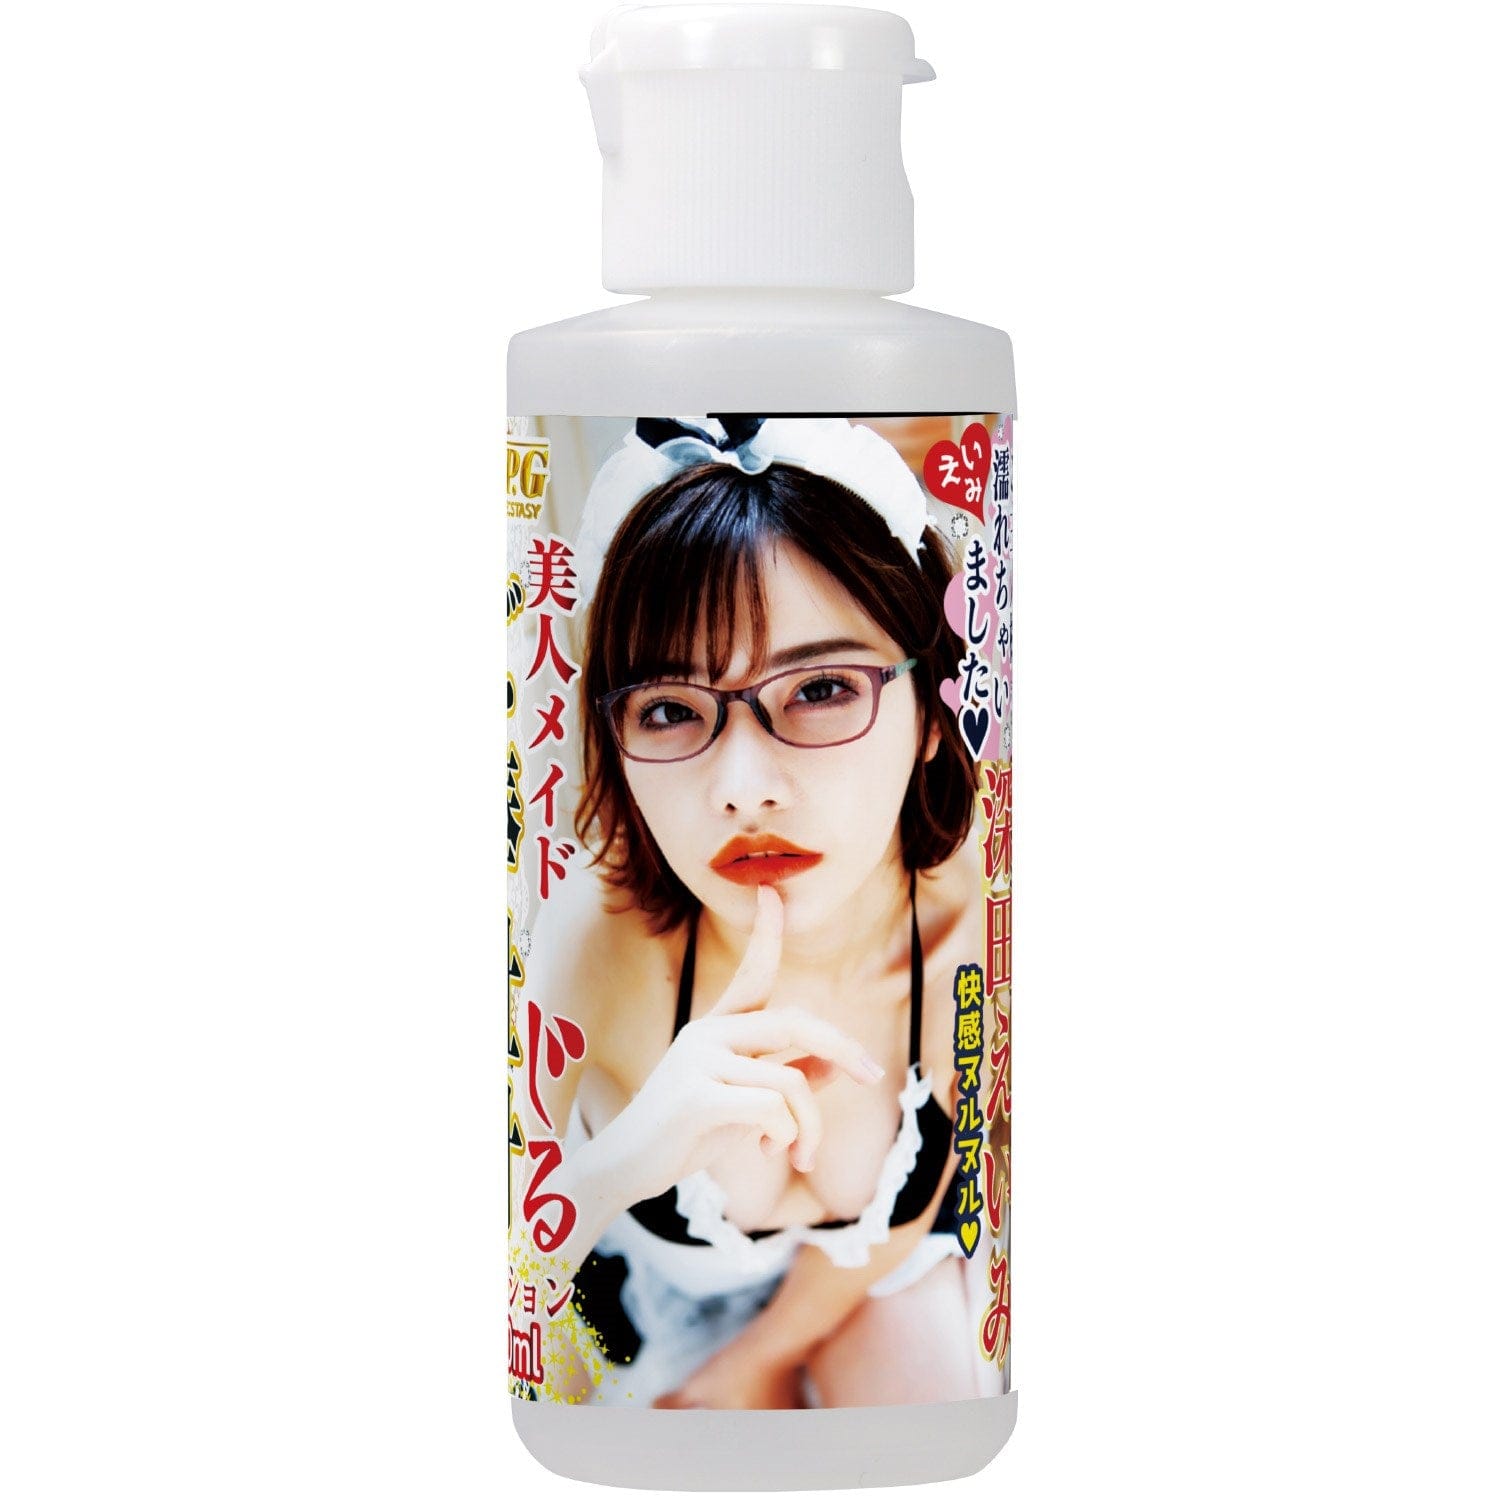 NPG - Beautiful Maid Service Juice Eimi Fukada Lubricant 80ml Lube (Water Based) 4571165966211 CherryAffairs